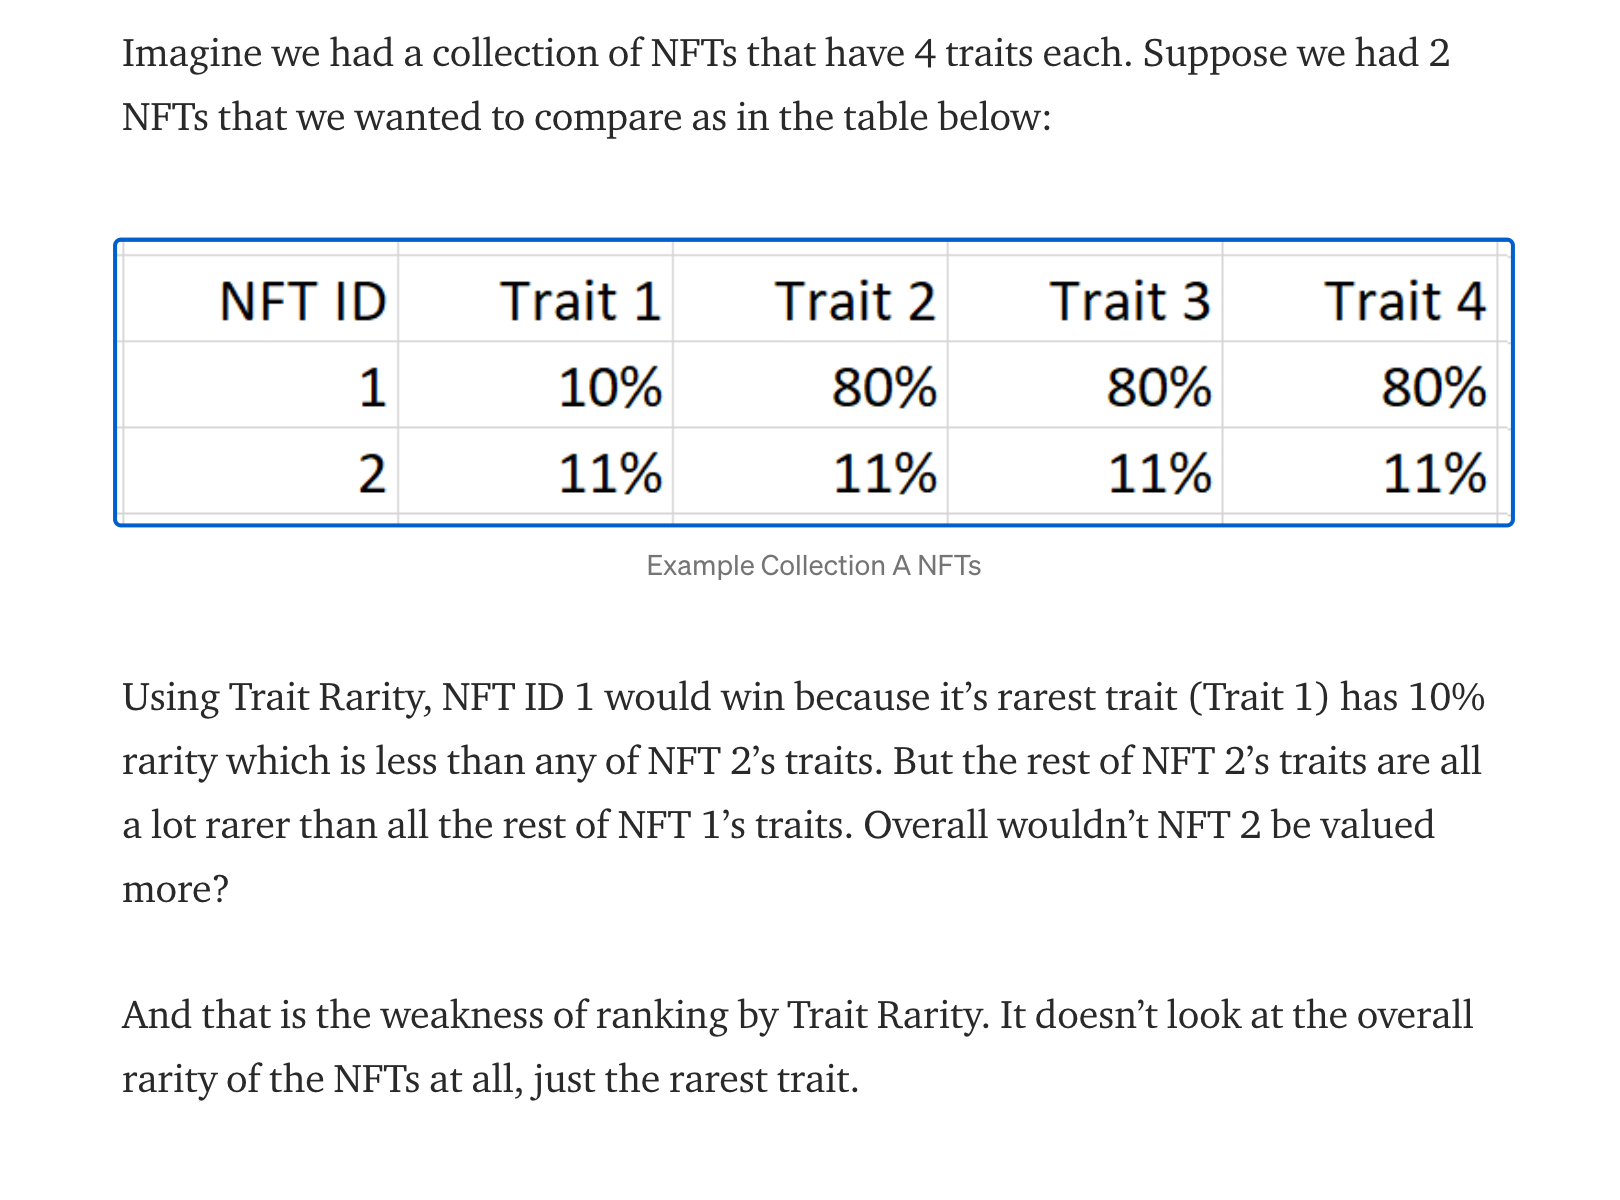 NFT trait rarity